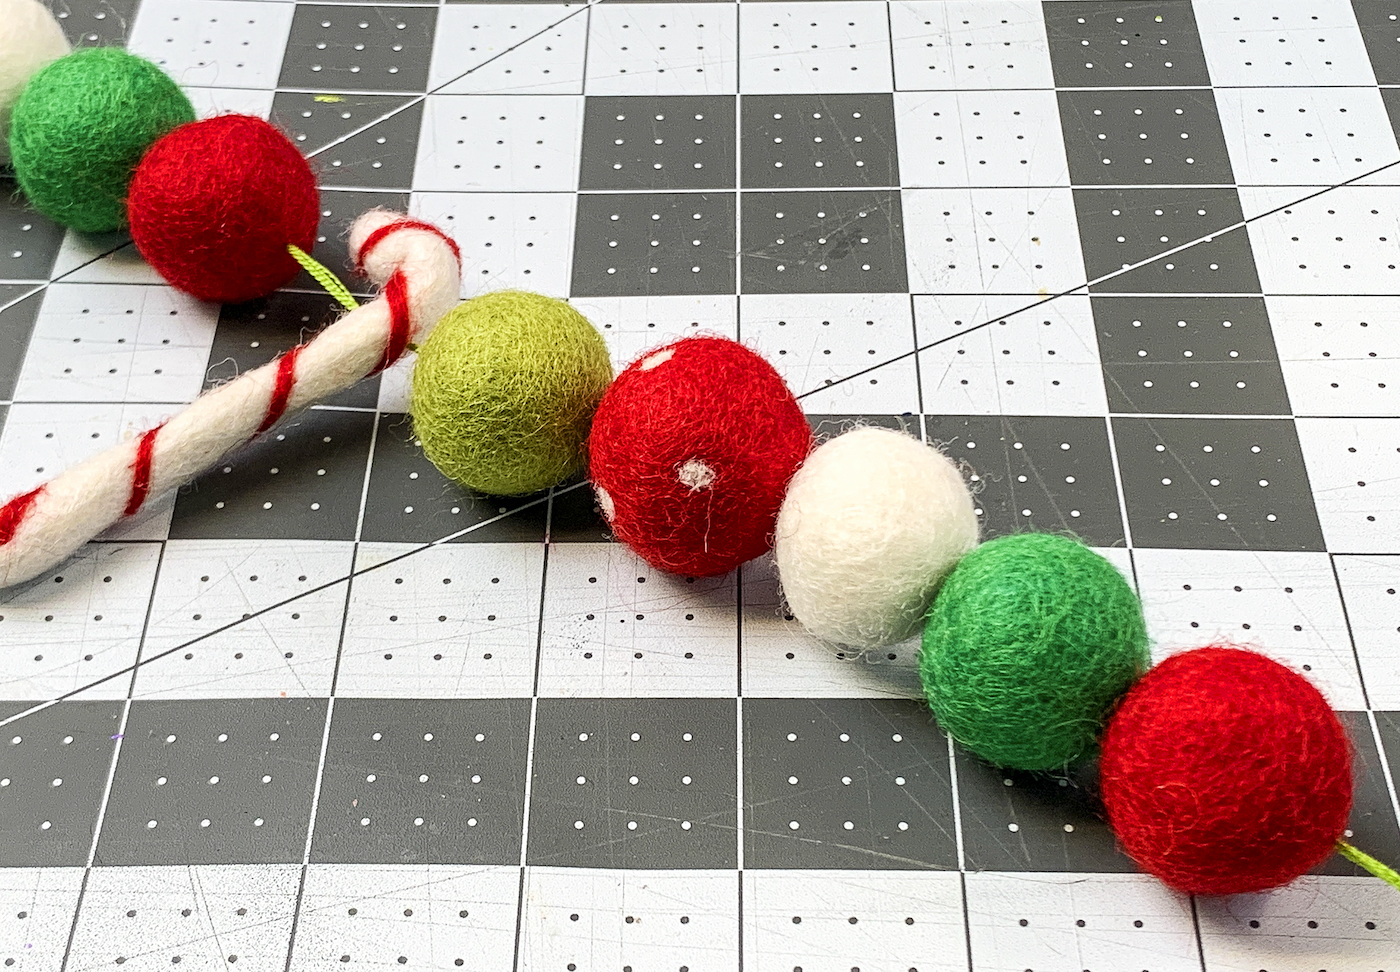 Felt balls and a felt candy cane strung onto embroidery floss